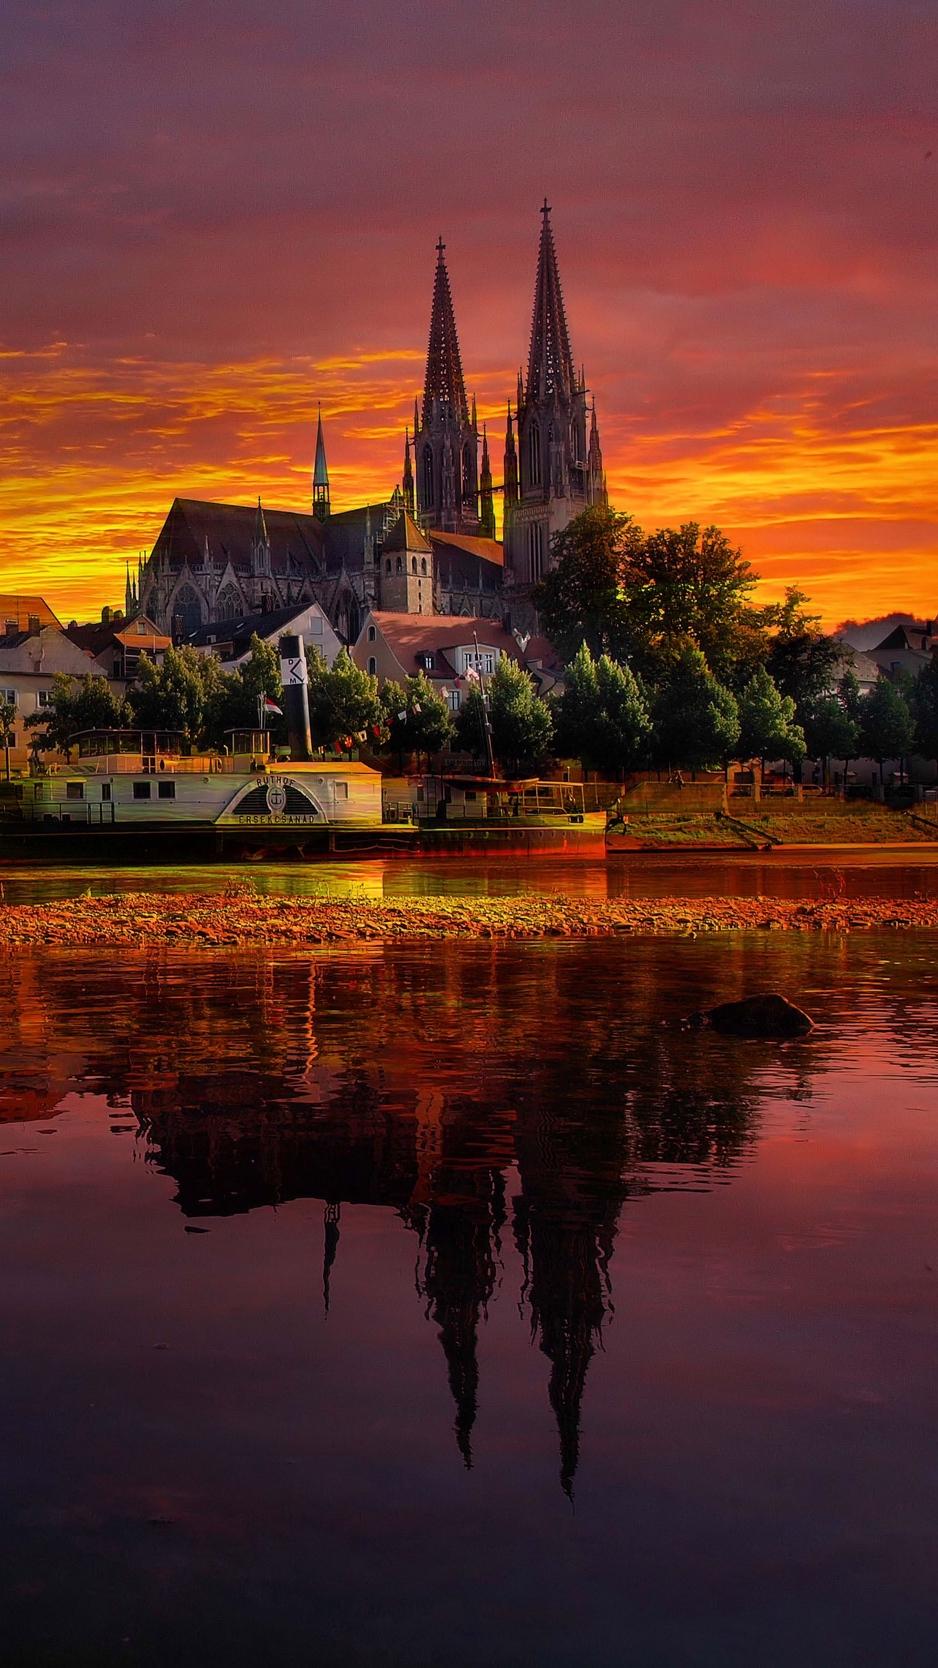 Download wallpaper 938x1668 regensburg, germany, sunset, cityscape